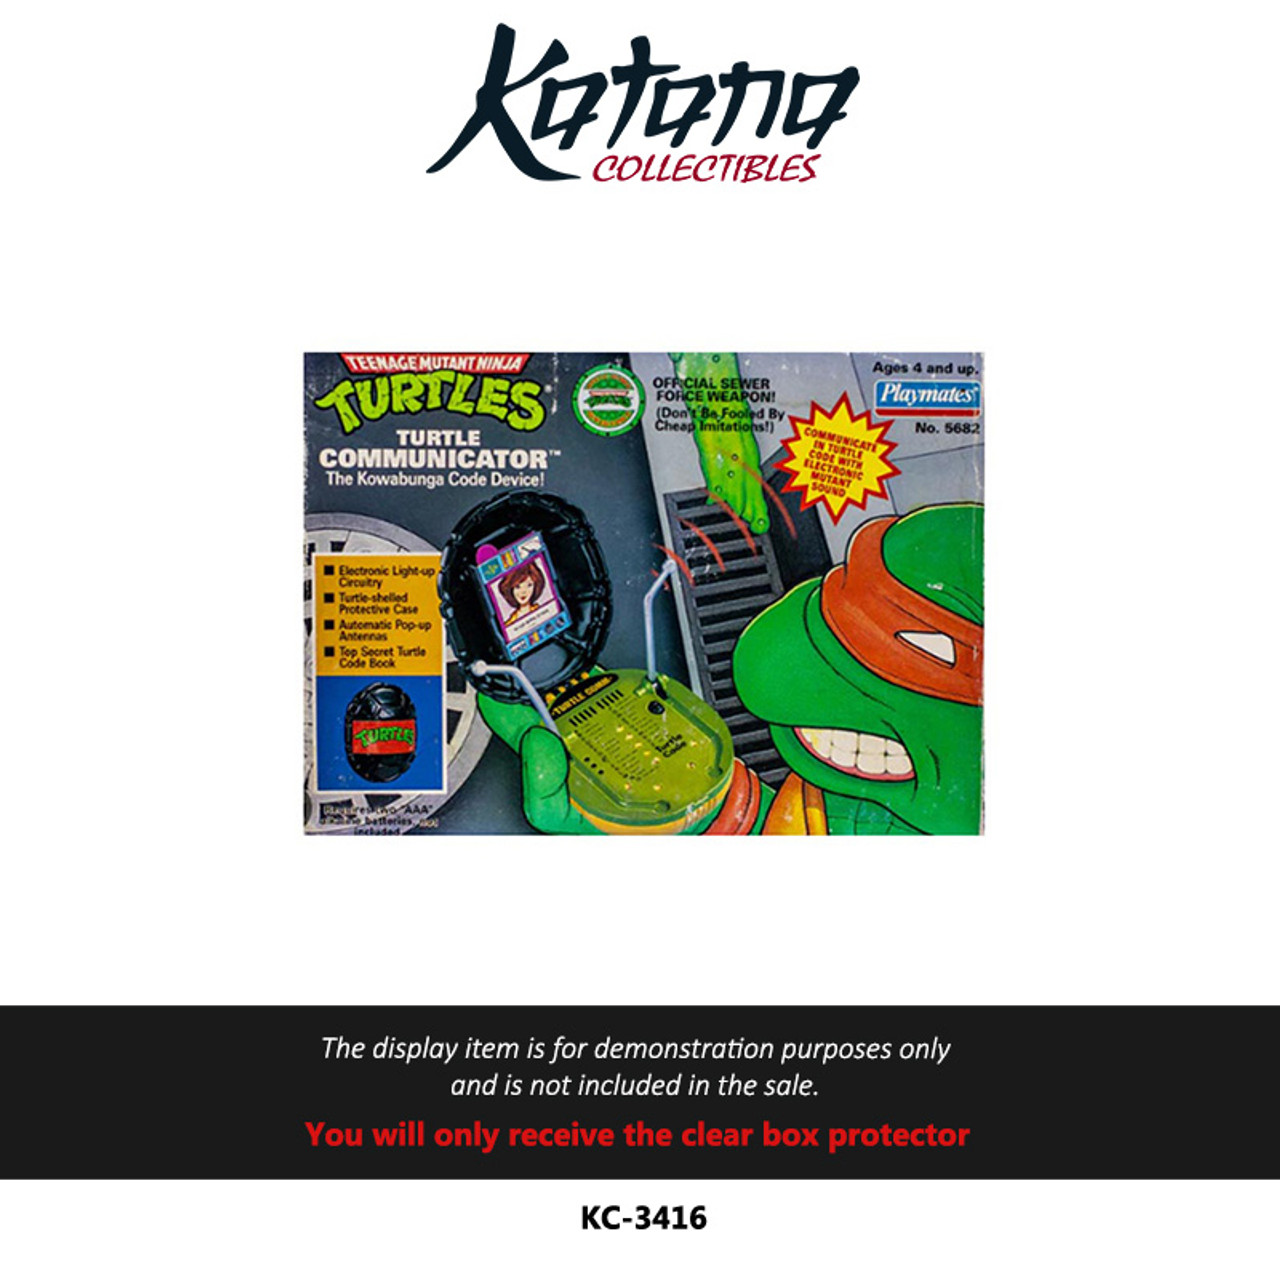 Katana Collectibles Protector For Teenage Mutant Ninja Turtles Communicator